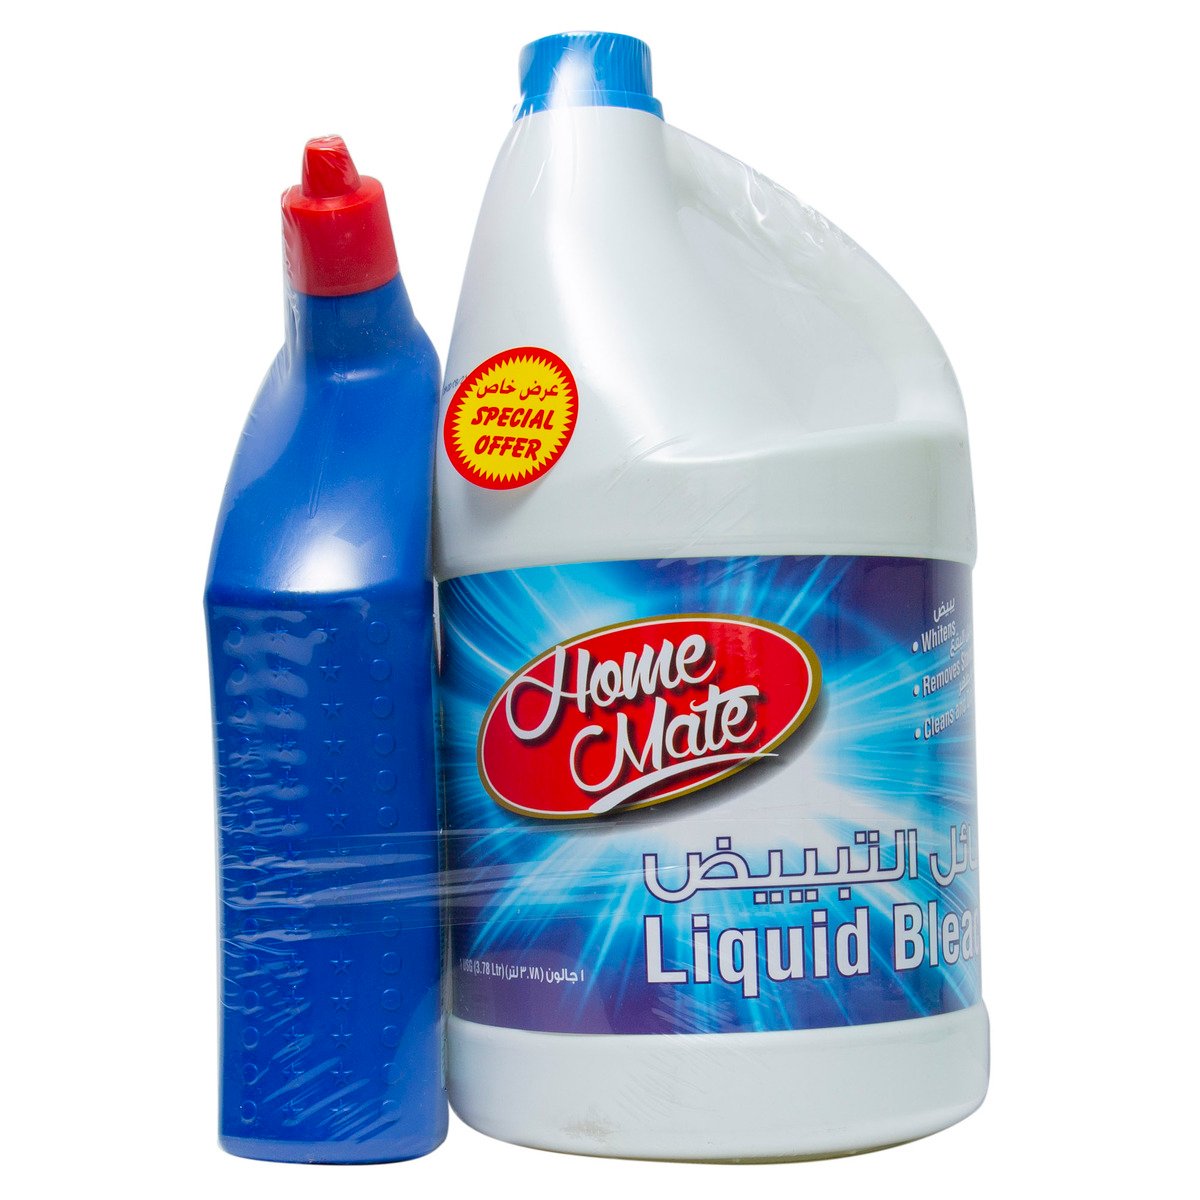 Home Mate Liquid Bleach 3.78 Litres + Toilet Cleaner 1 Litre